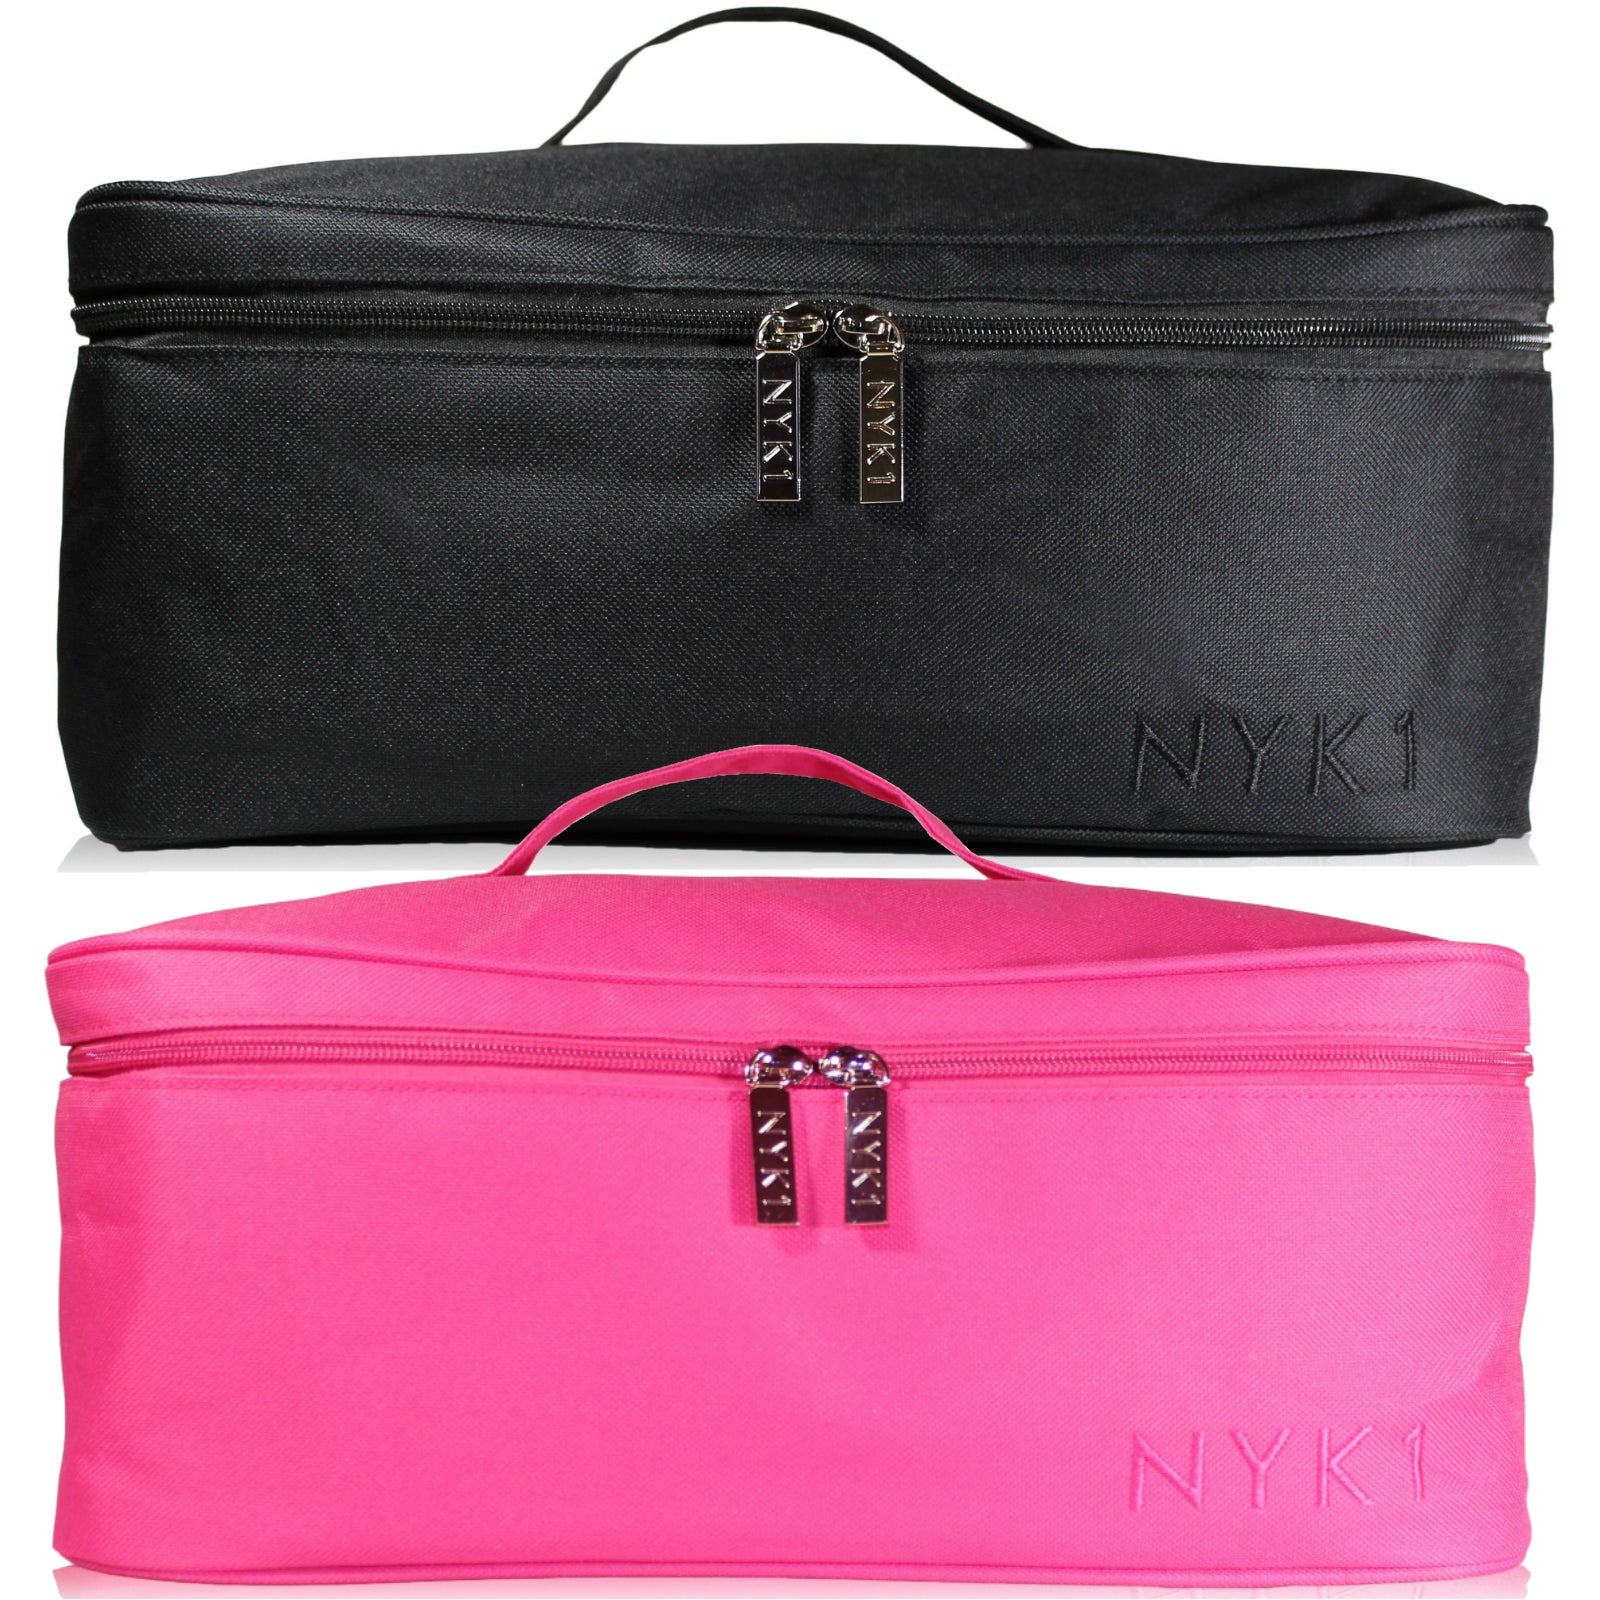 NYK1 Cosmetic Make Up Vanity Case Bag Pink or Black